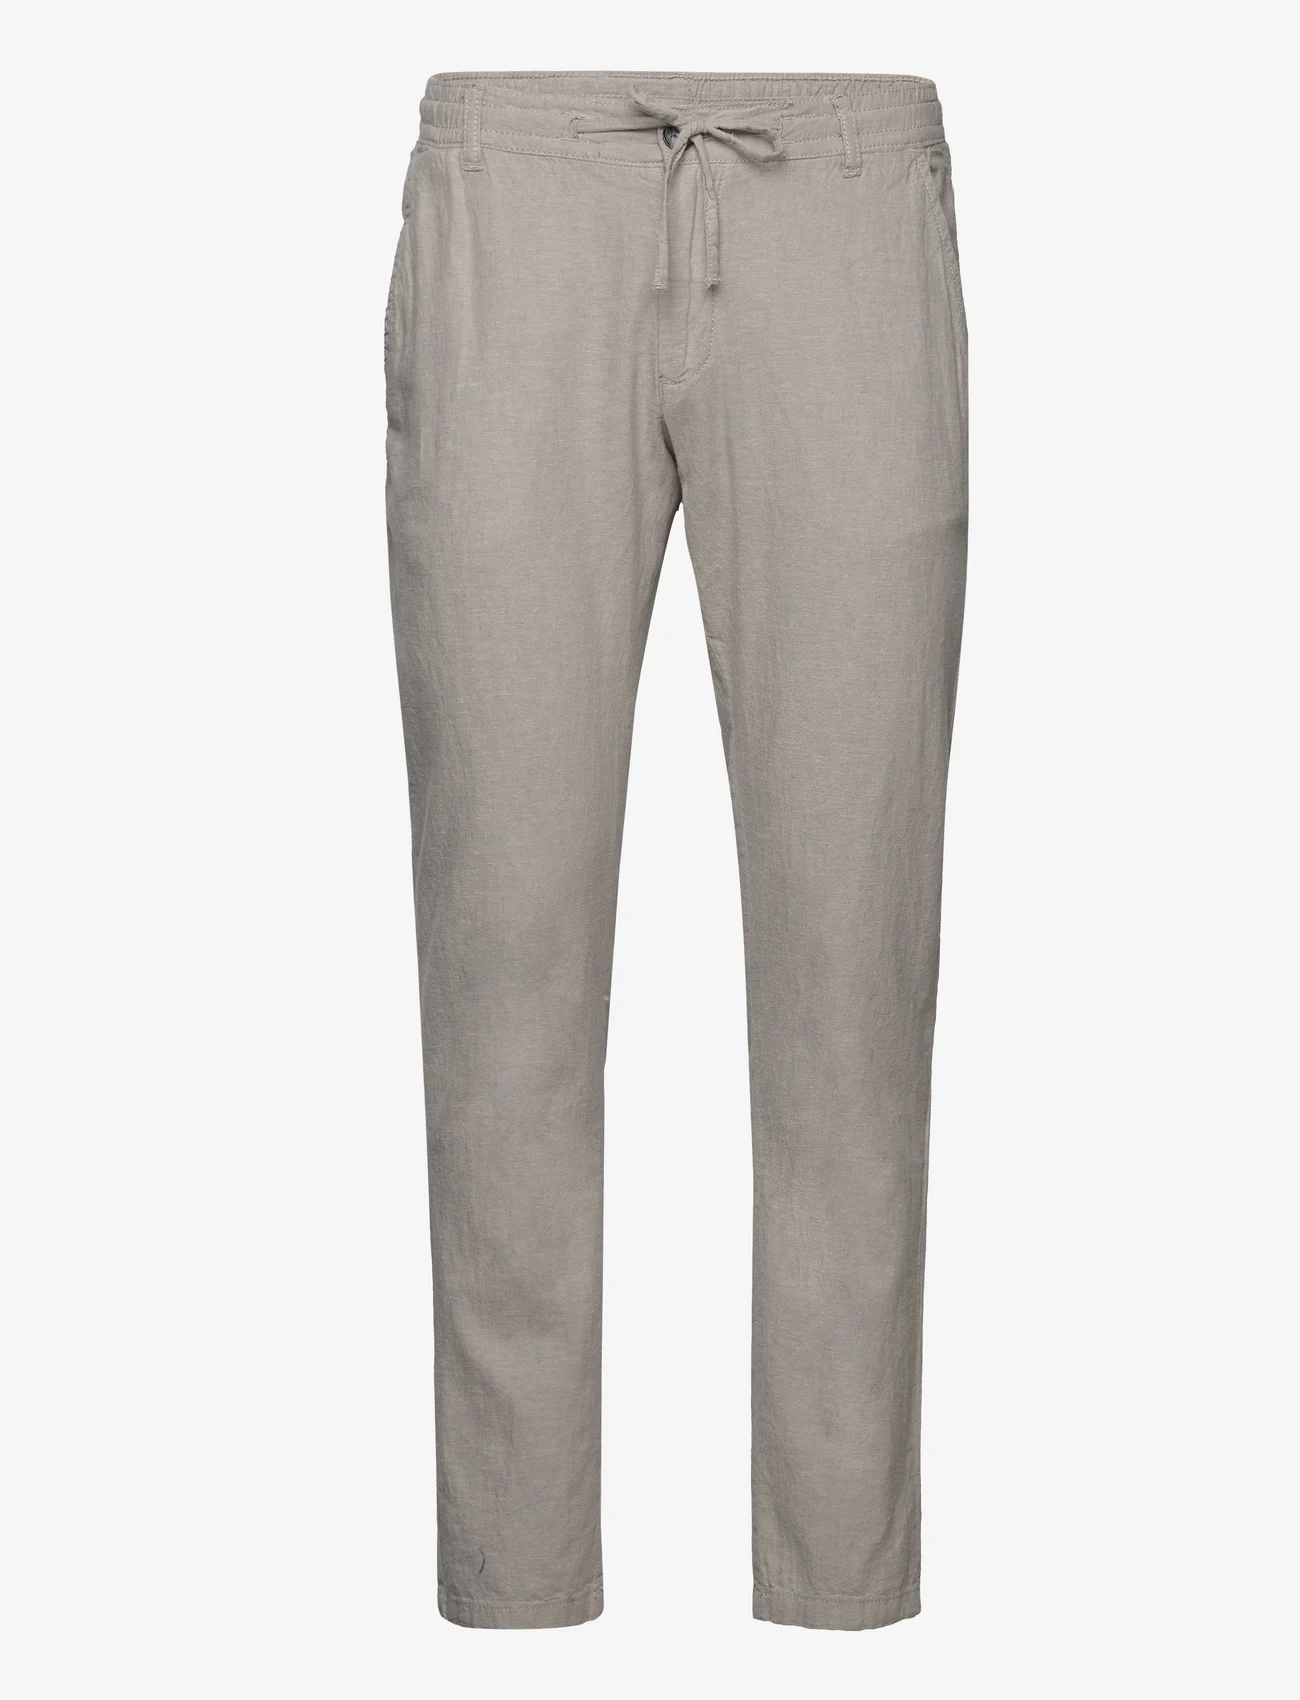 Lindbergh - Linen pants - pellavahousut - grey - 0